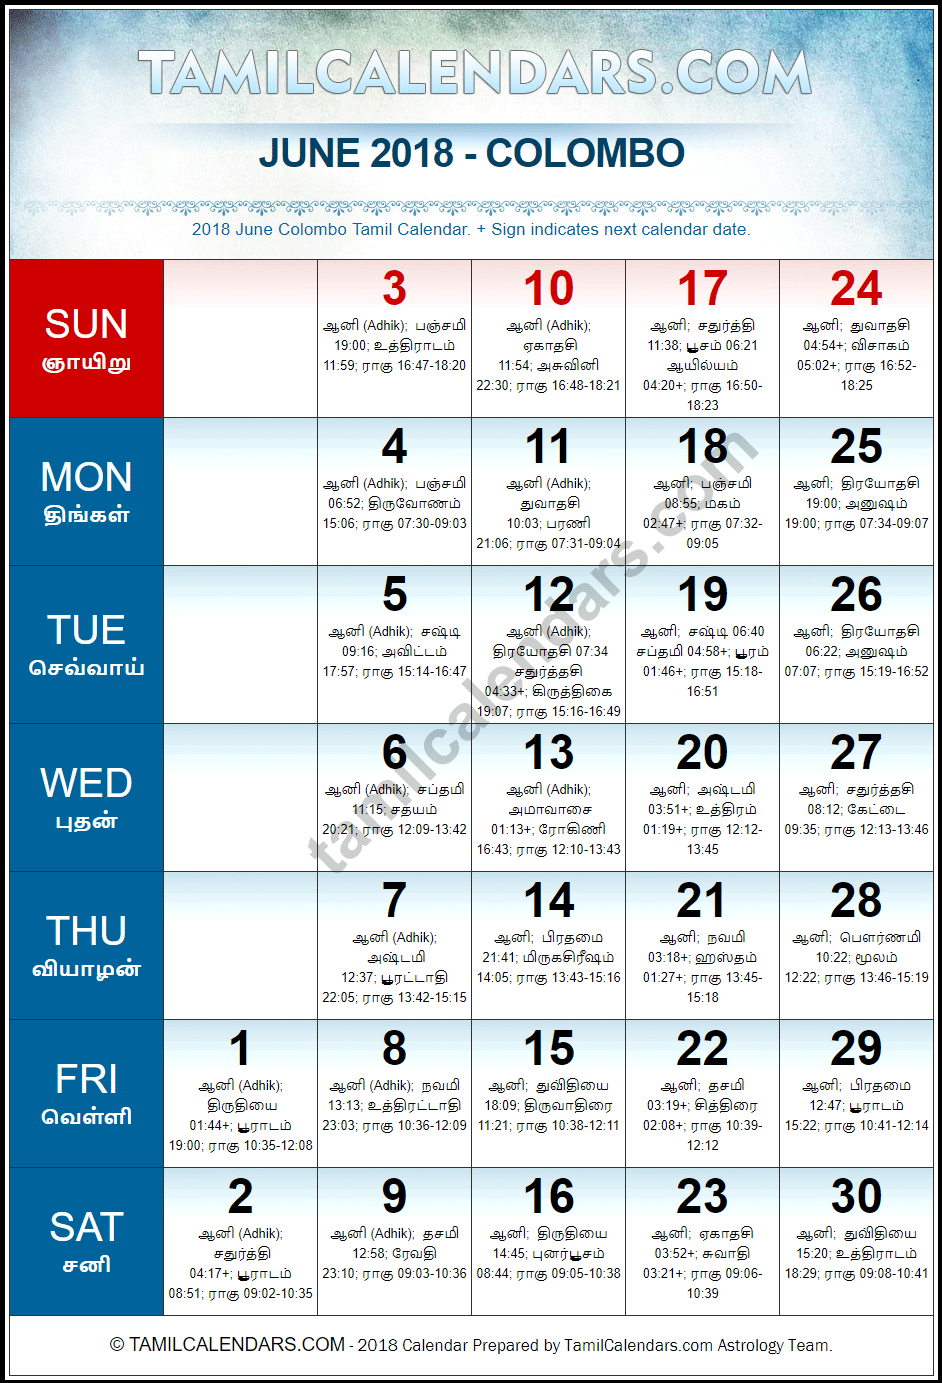 June 2018 Tamil Calendar for Sri Lanka (Colombo)